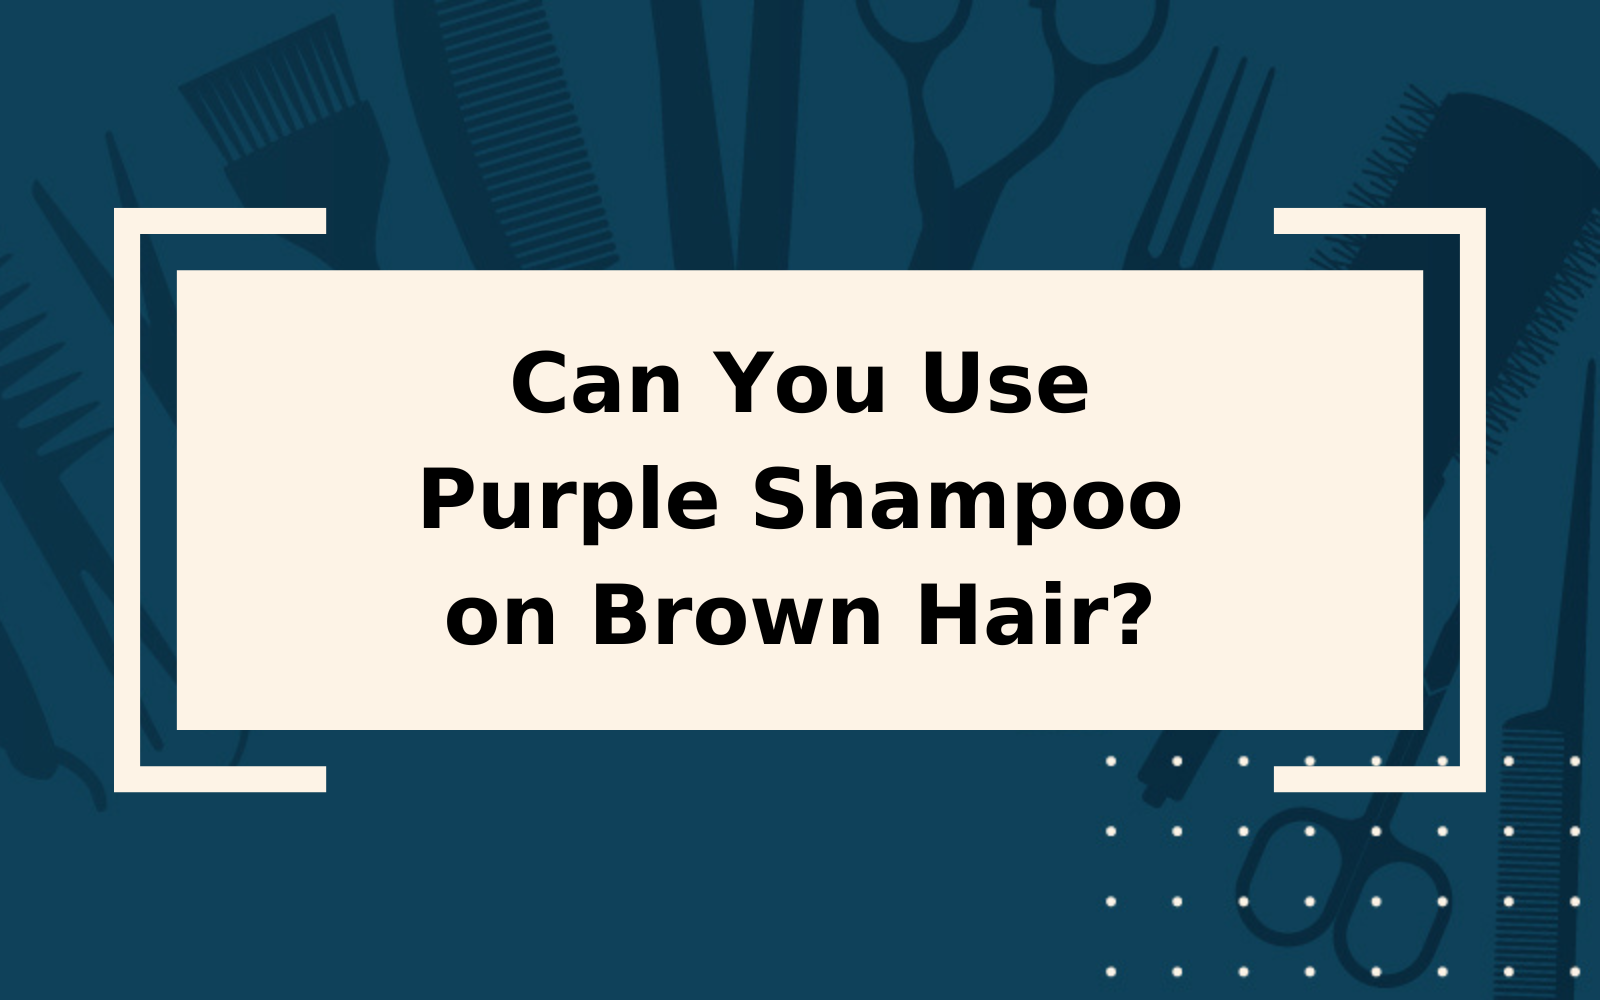 Can You Use Purple Shampoo on Brown Hair?